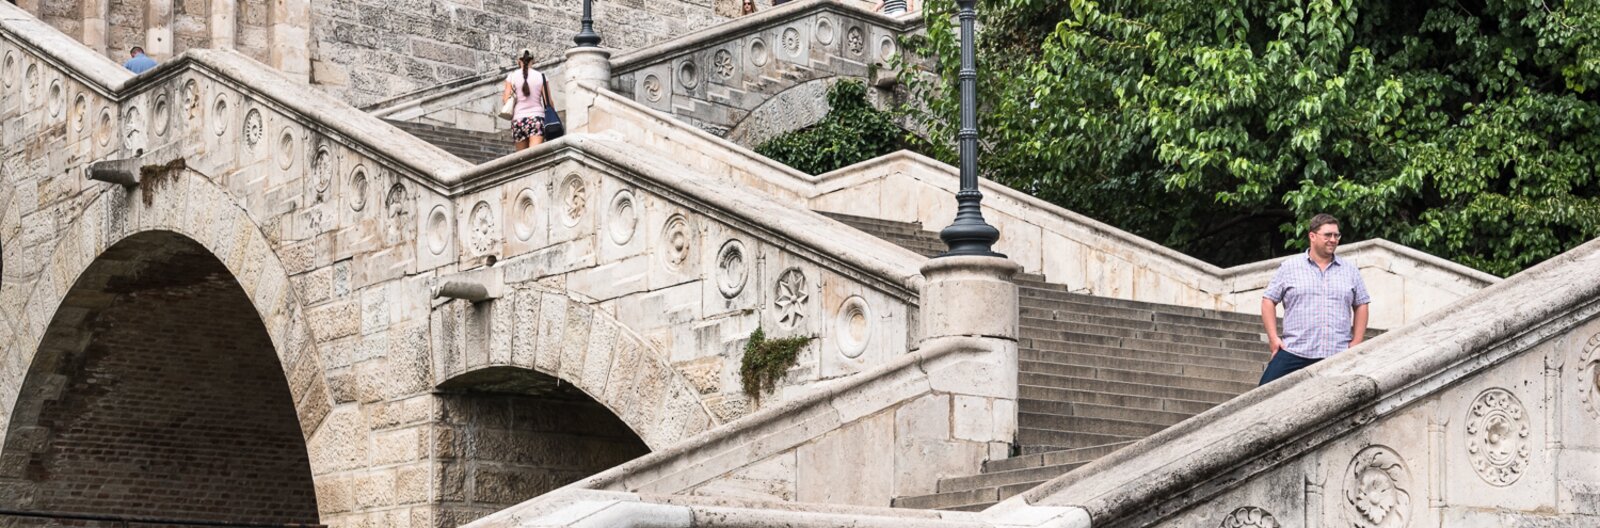 The astounding stairways of Buda Castle